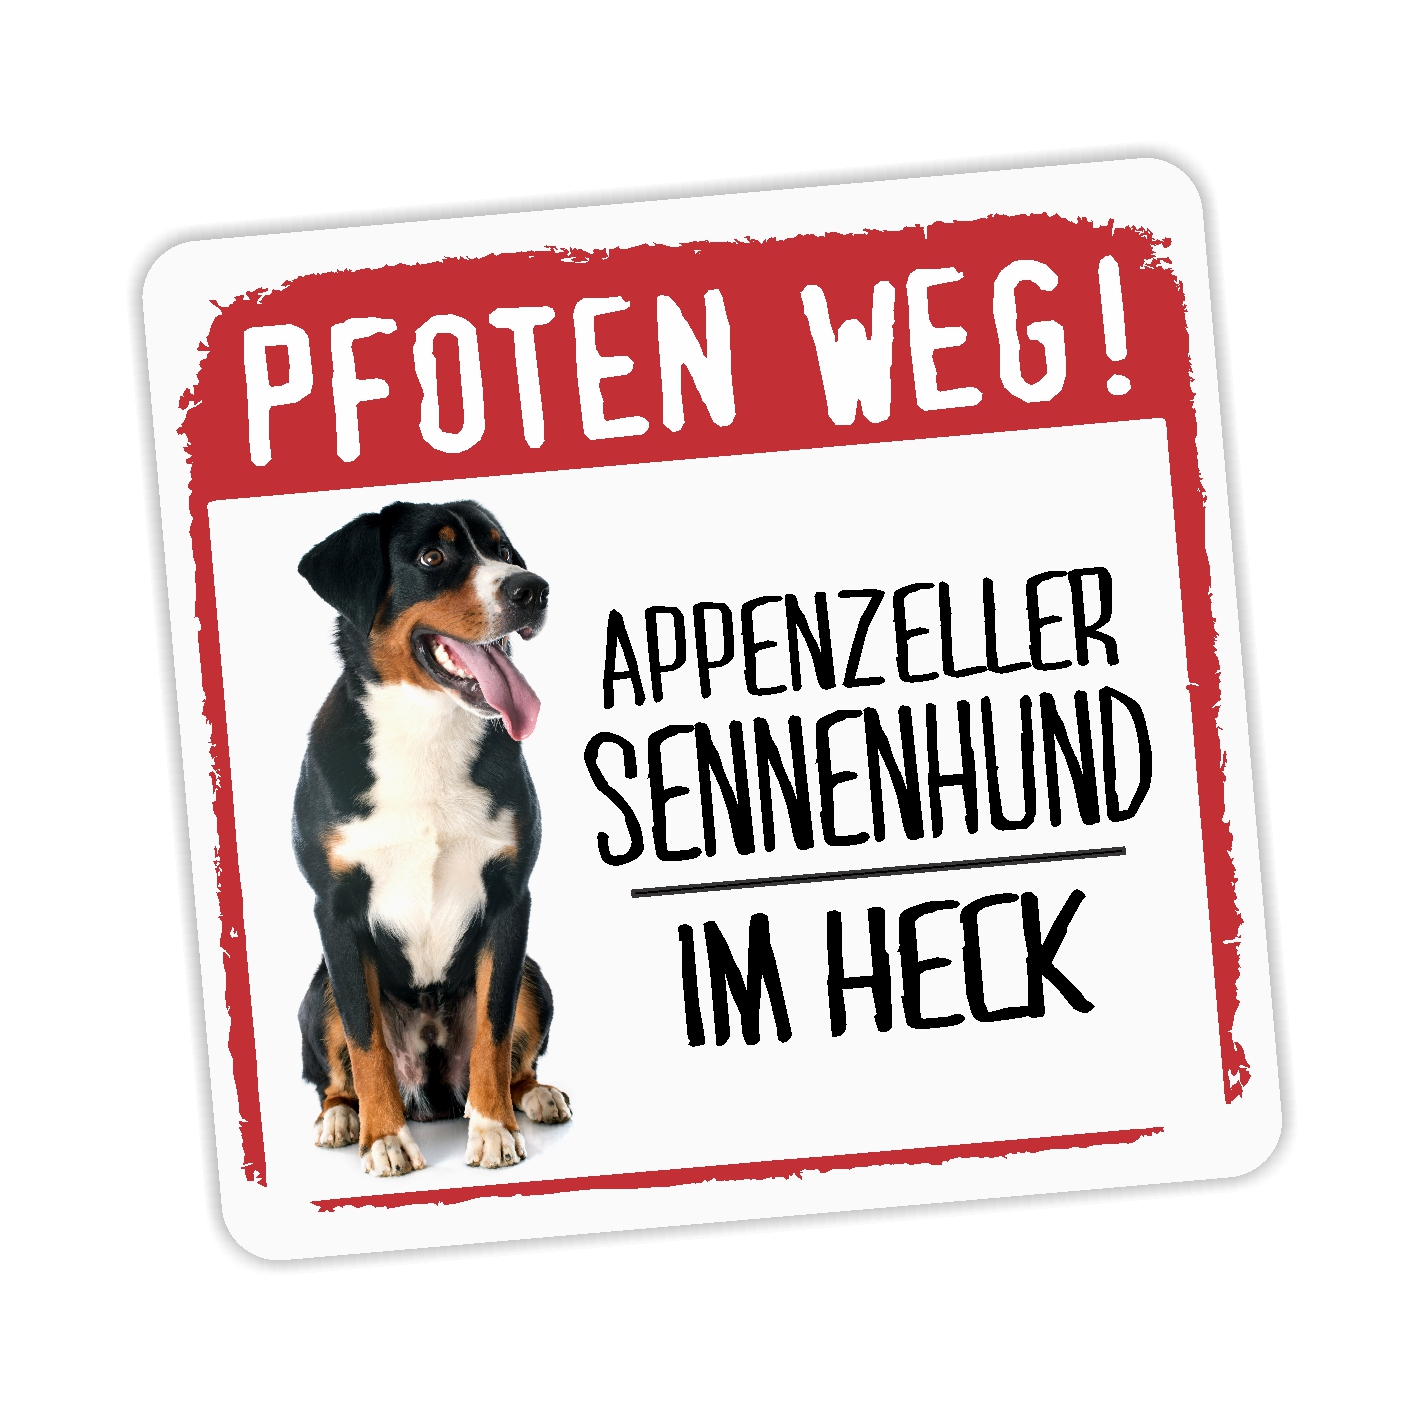 Appenzeller Sennenhund Sennen Hund Schweiz Dog Pfoten weg Aufkleber  Digitaldruck Motiv by SIVIWONDER